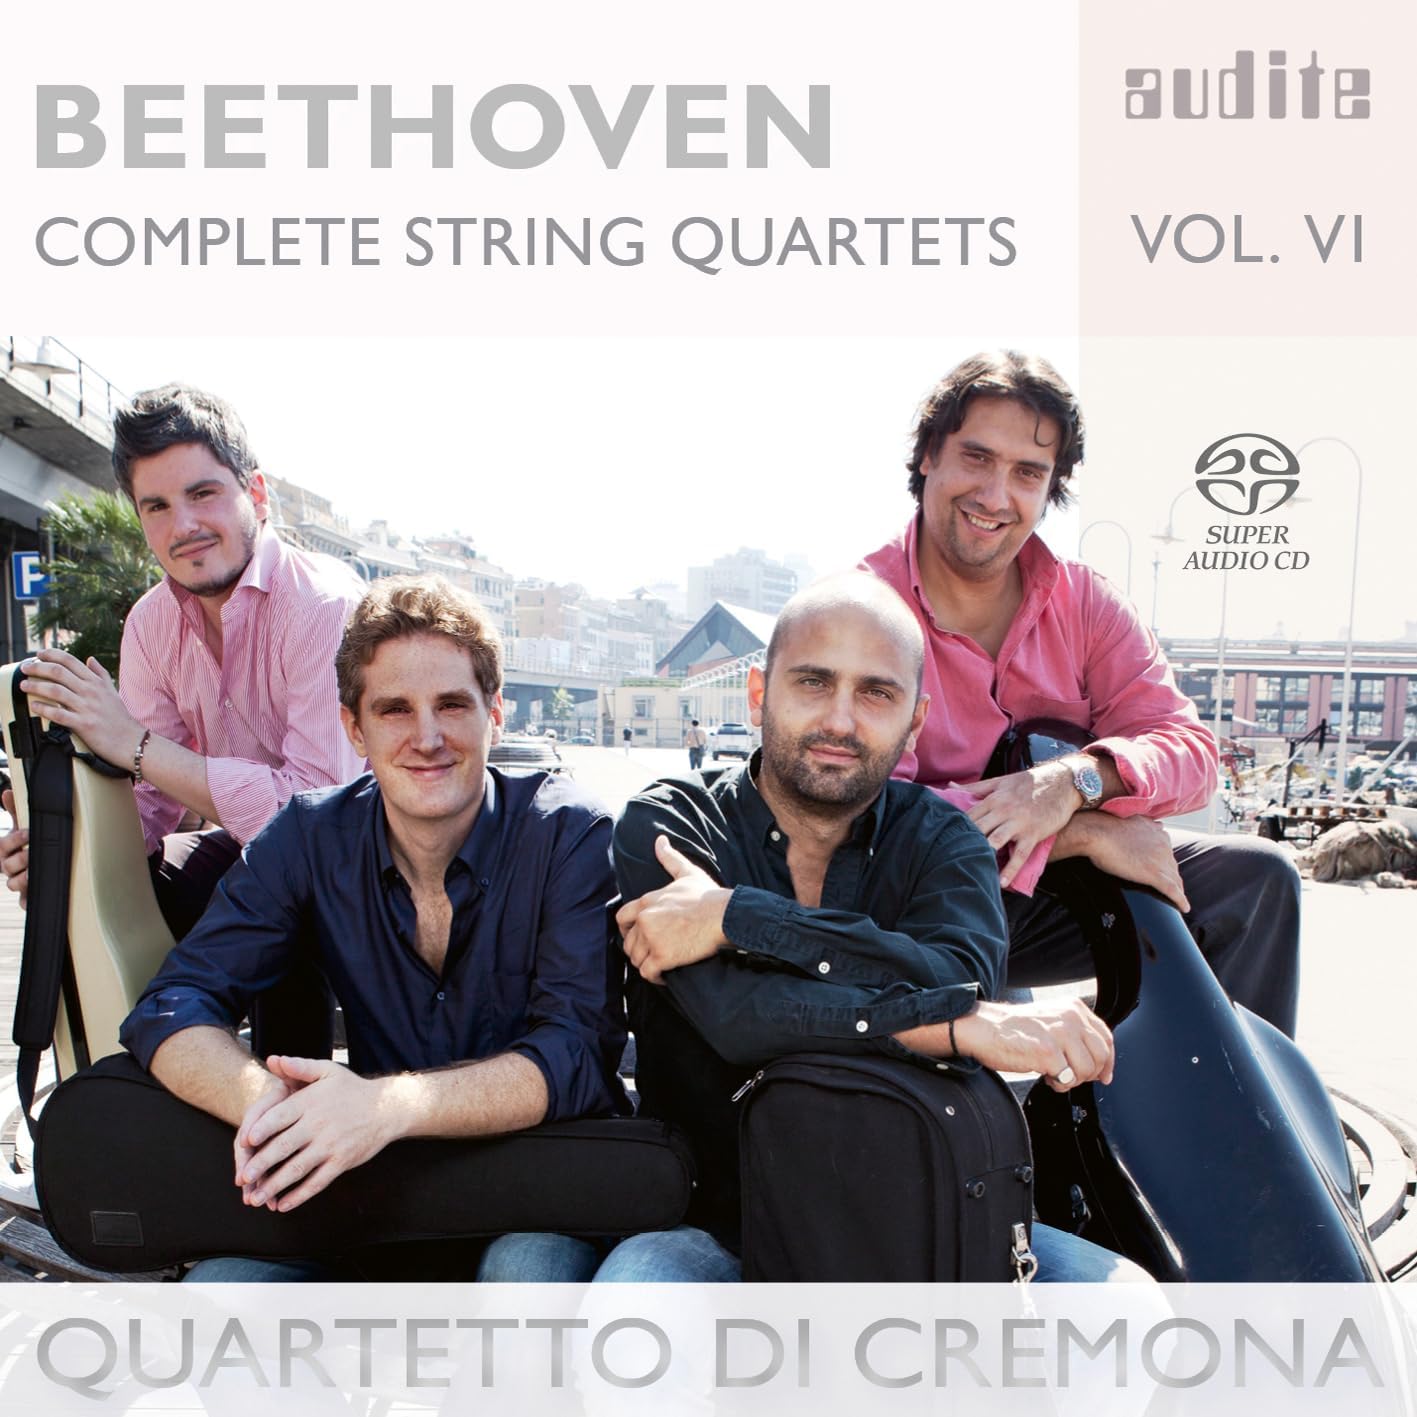 Beethoven Complete String Quartets Vol. VI